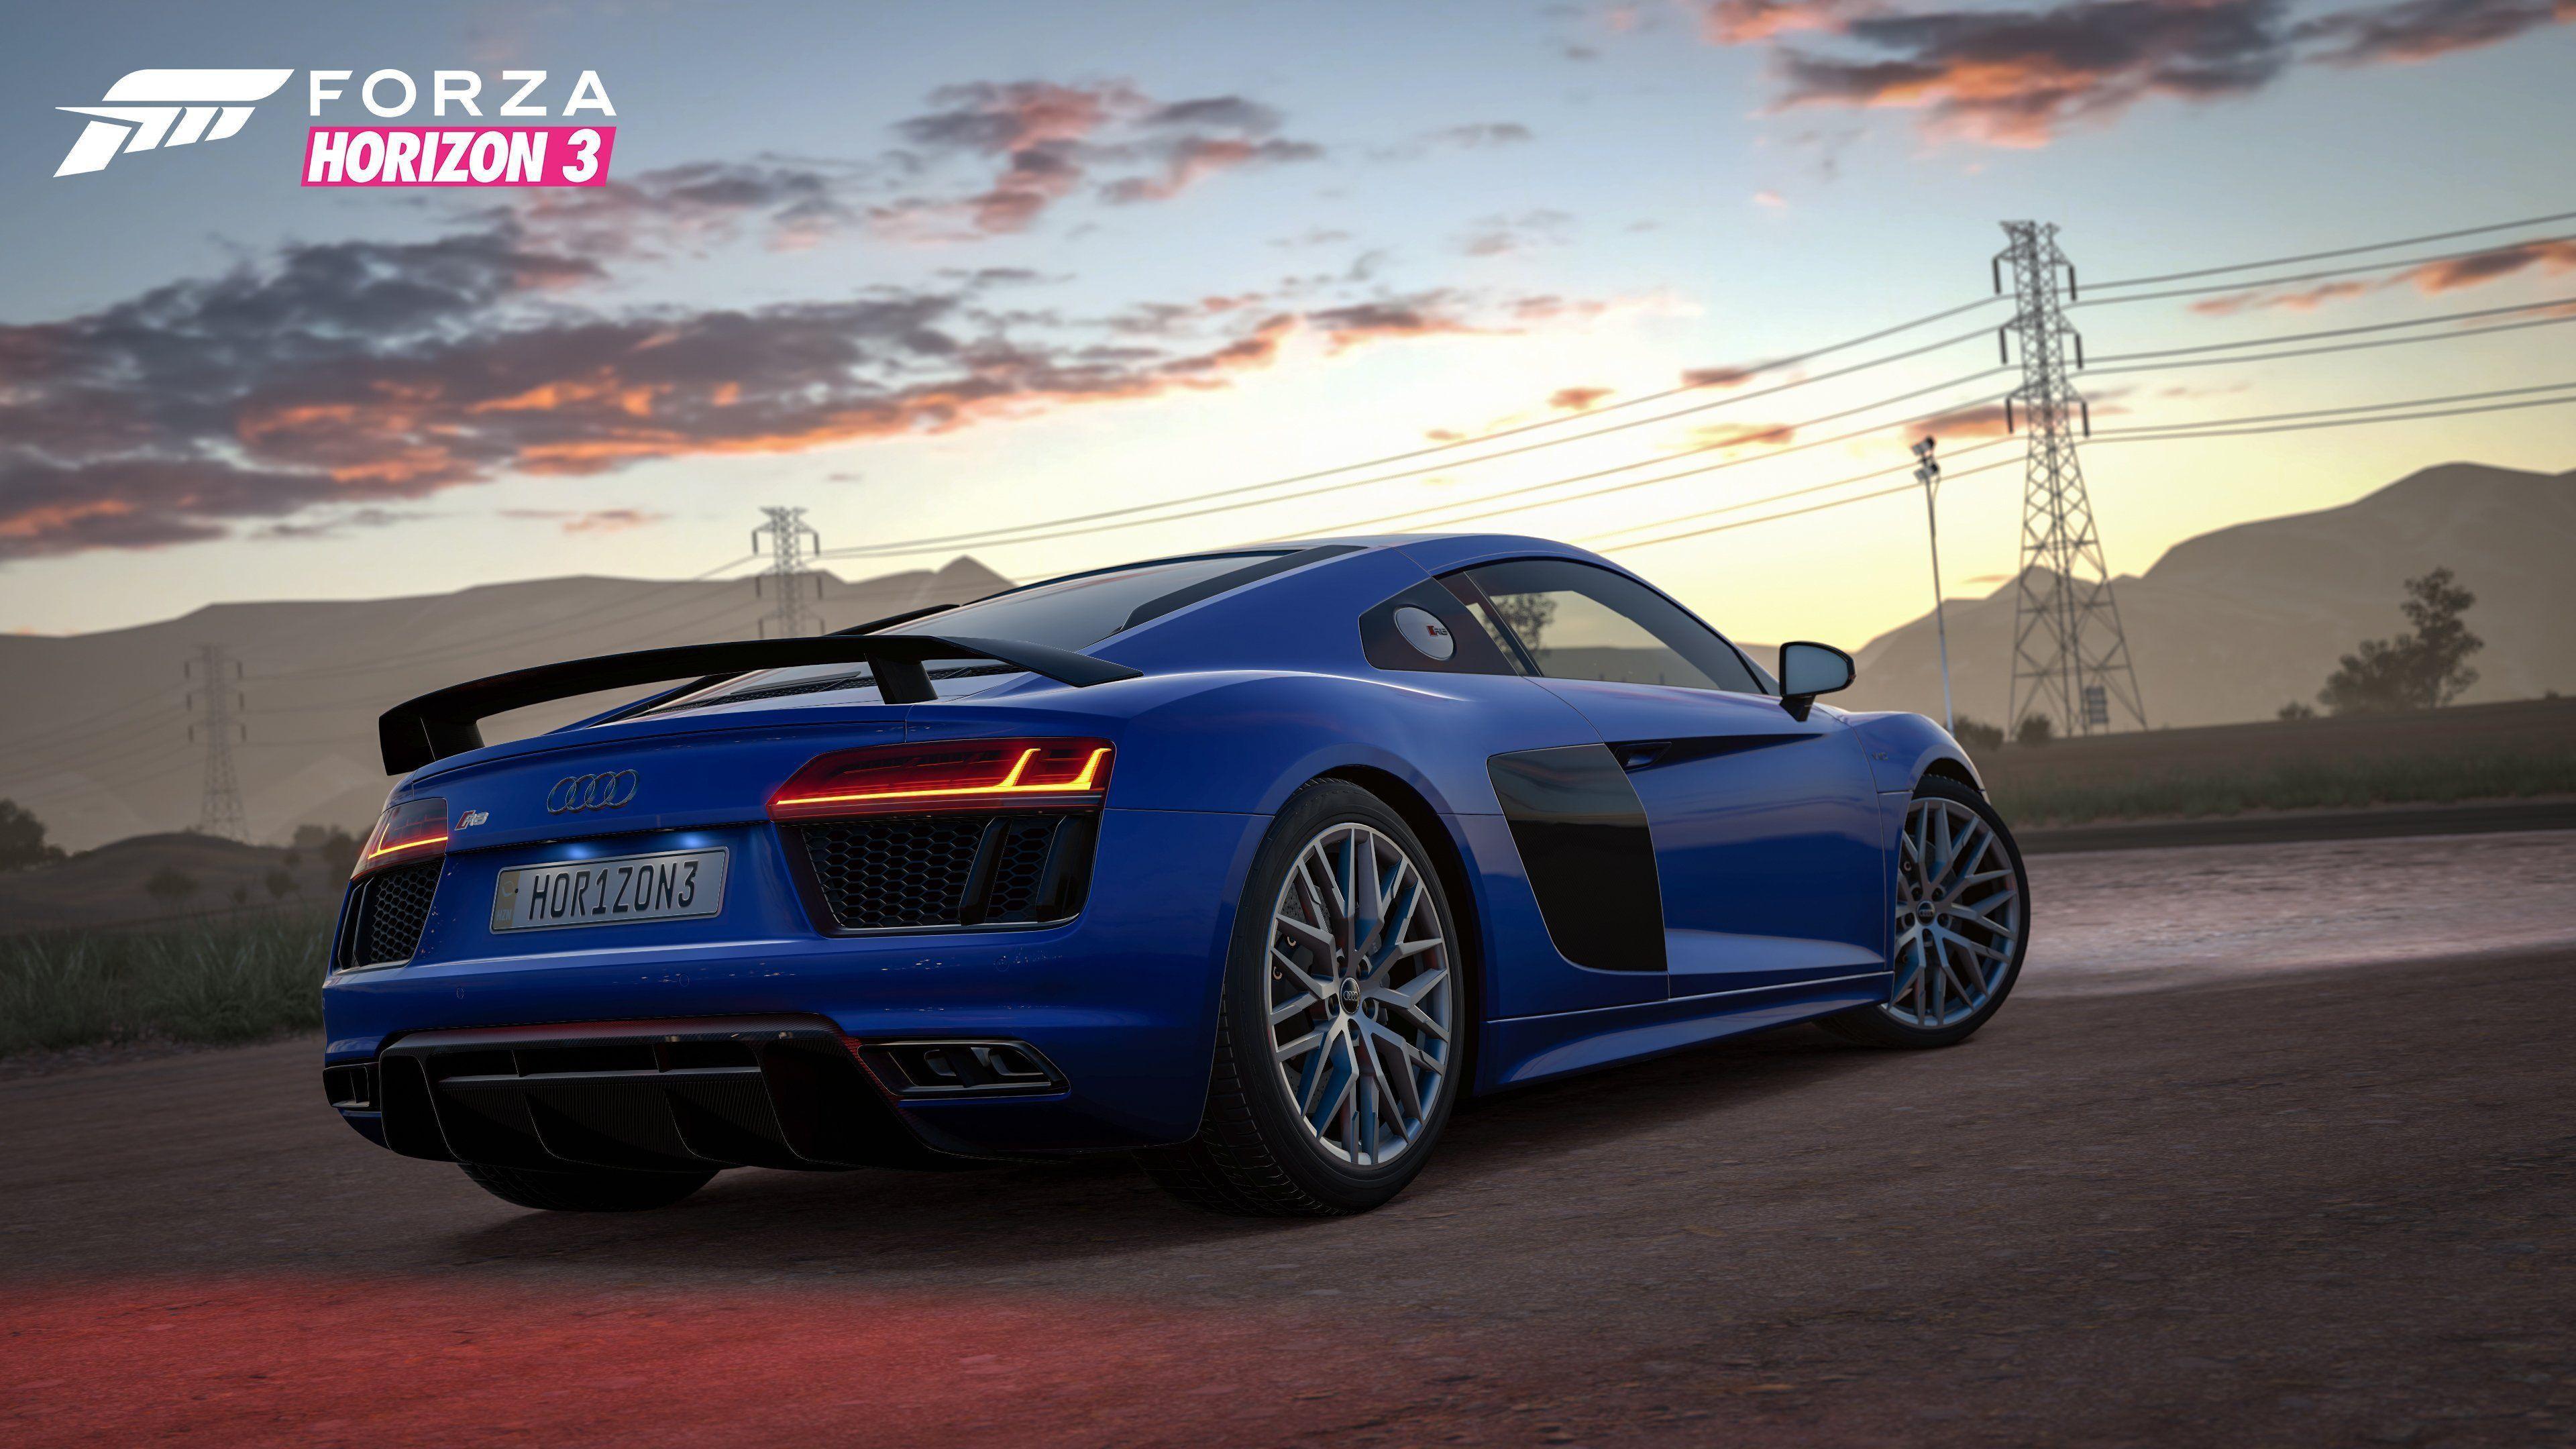 Forza Horizon 3 Wallpaper Image Photo Picture Background